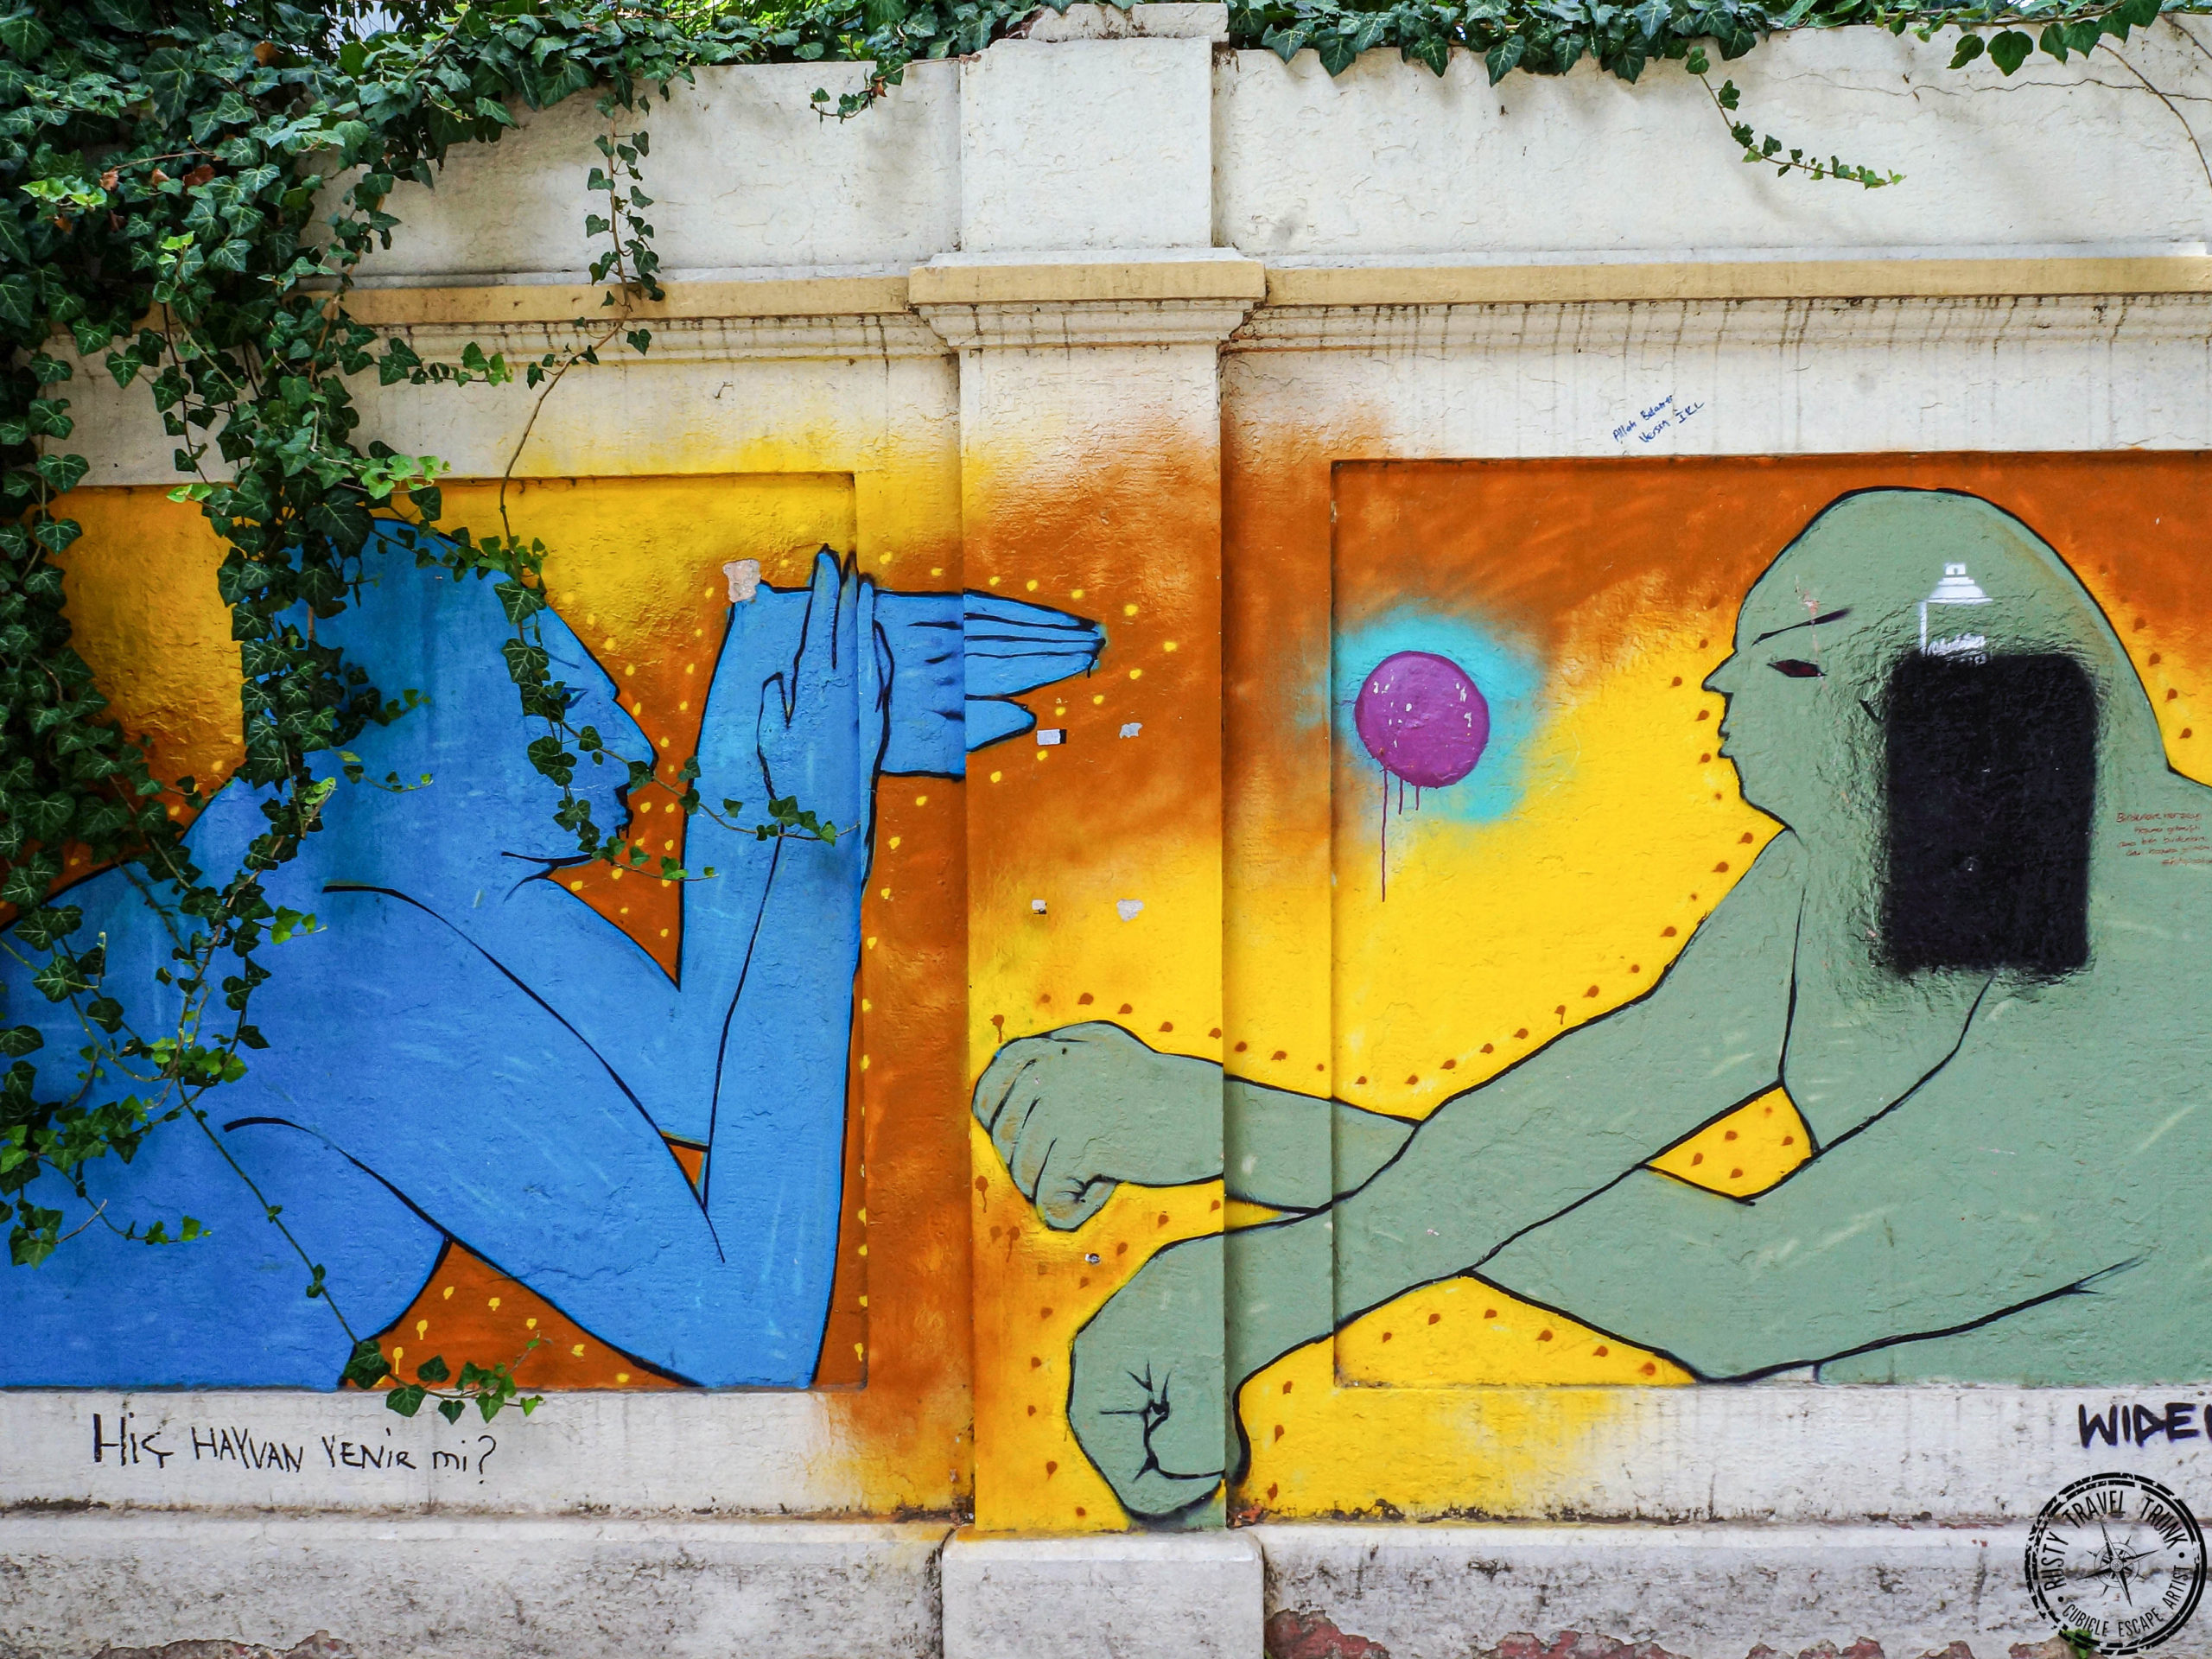 Istanbul Asian side - street art